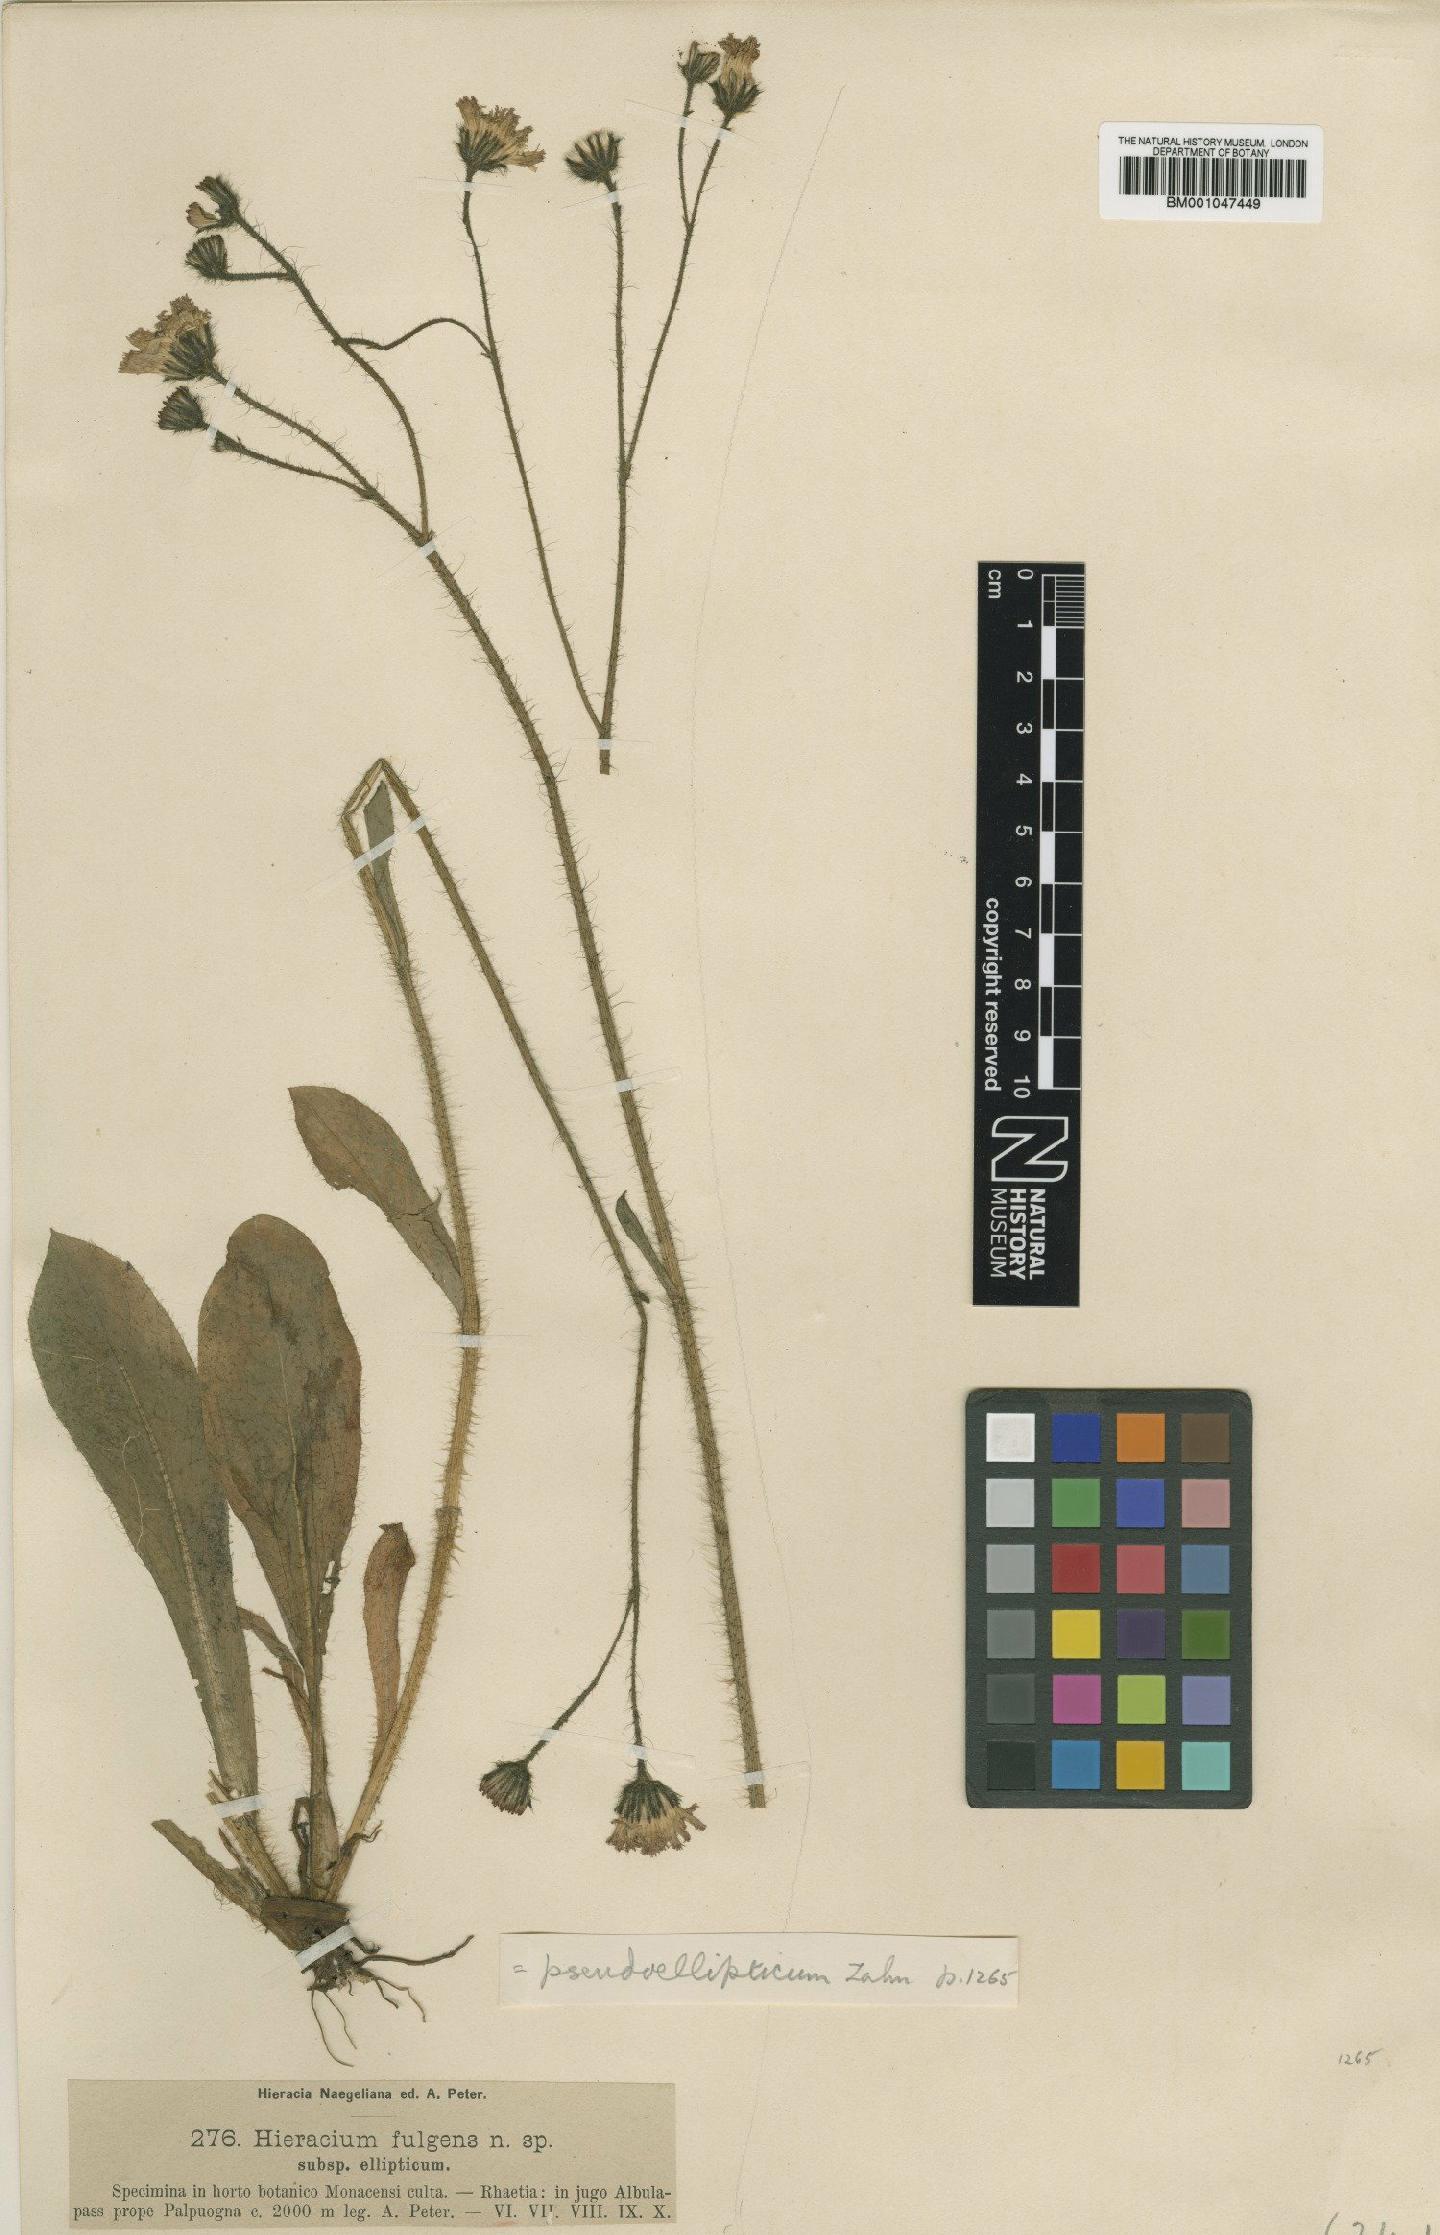 To NHMUK collection (Hieracium fulgens subsp. pseudellipticum Zahn; Type; NHMUK:ecatalogue:2764270)